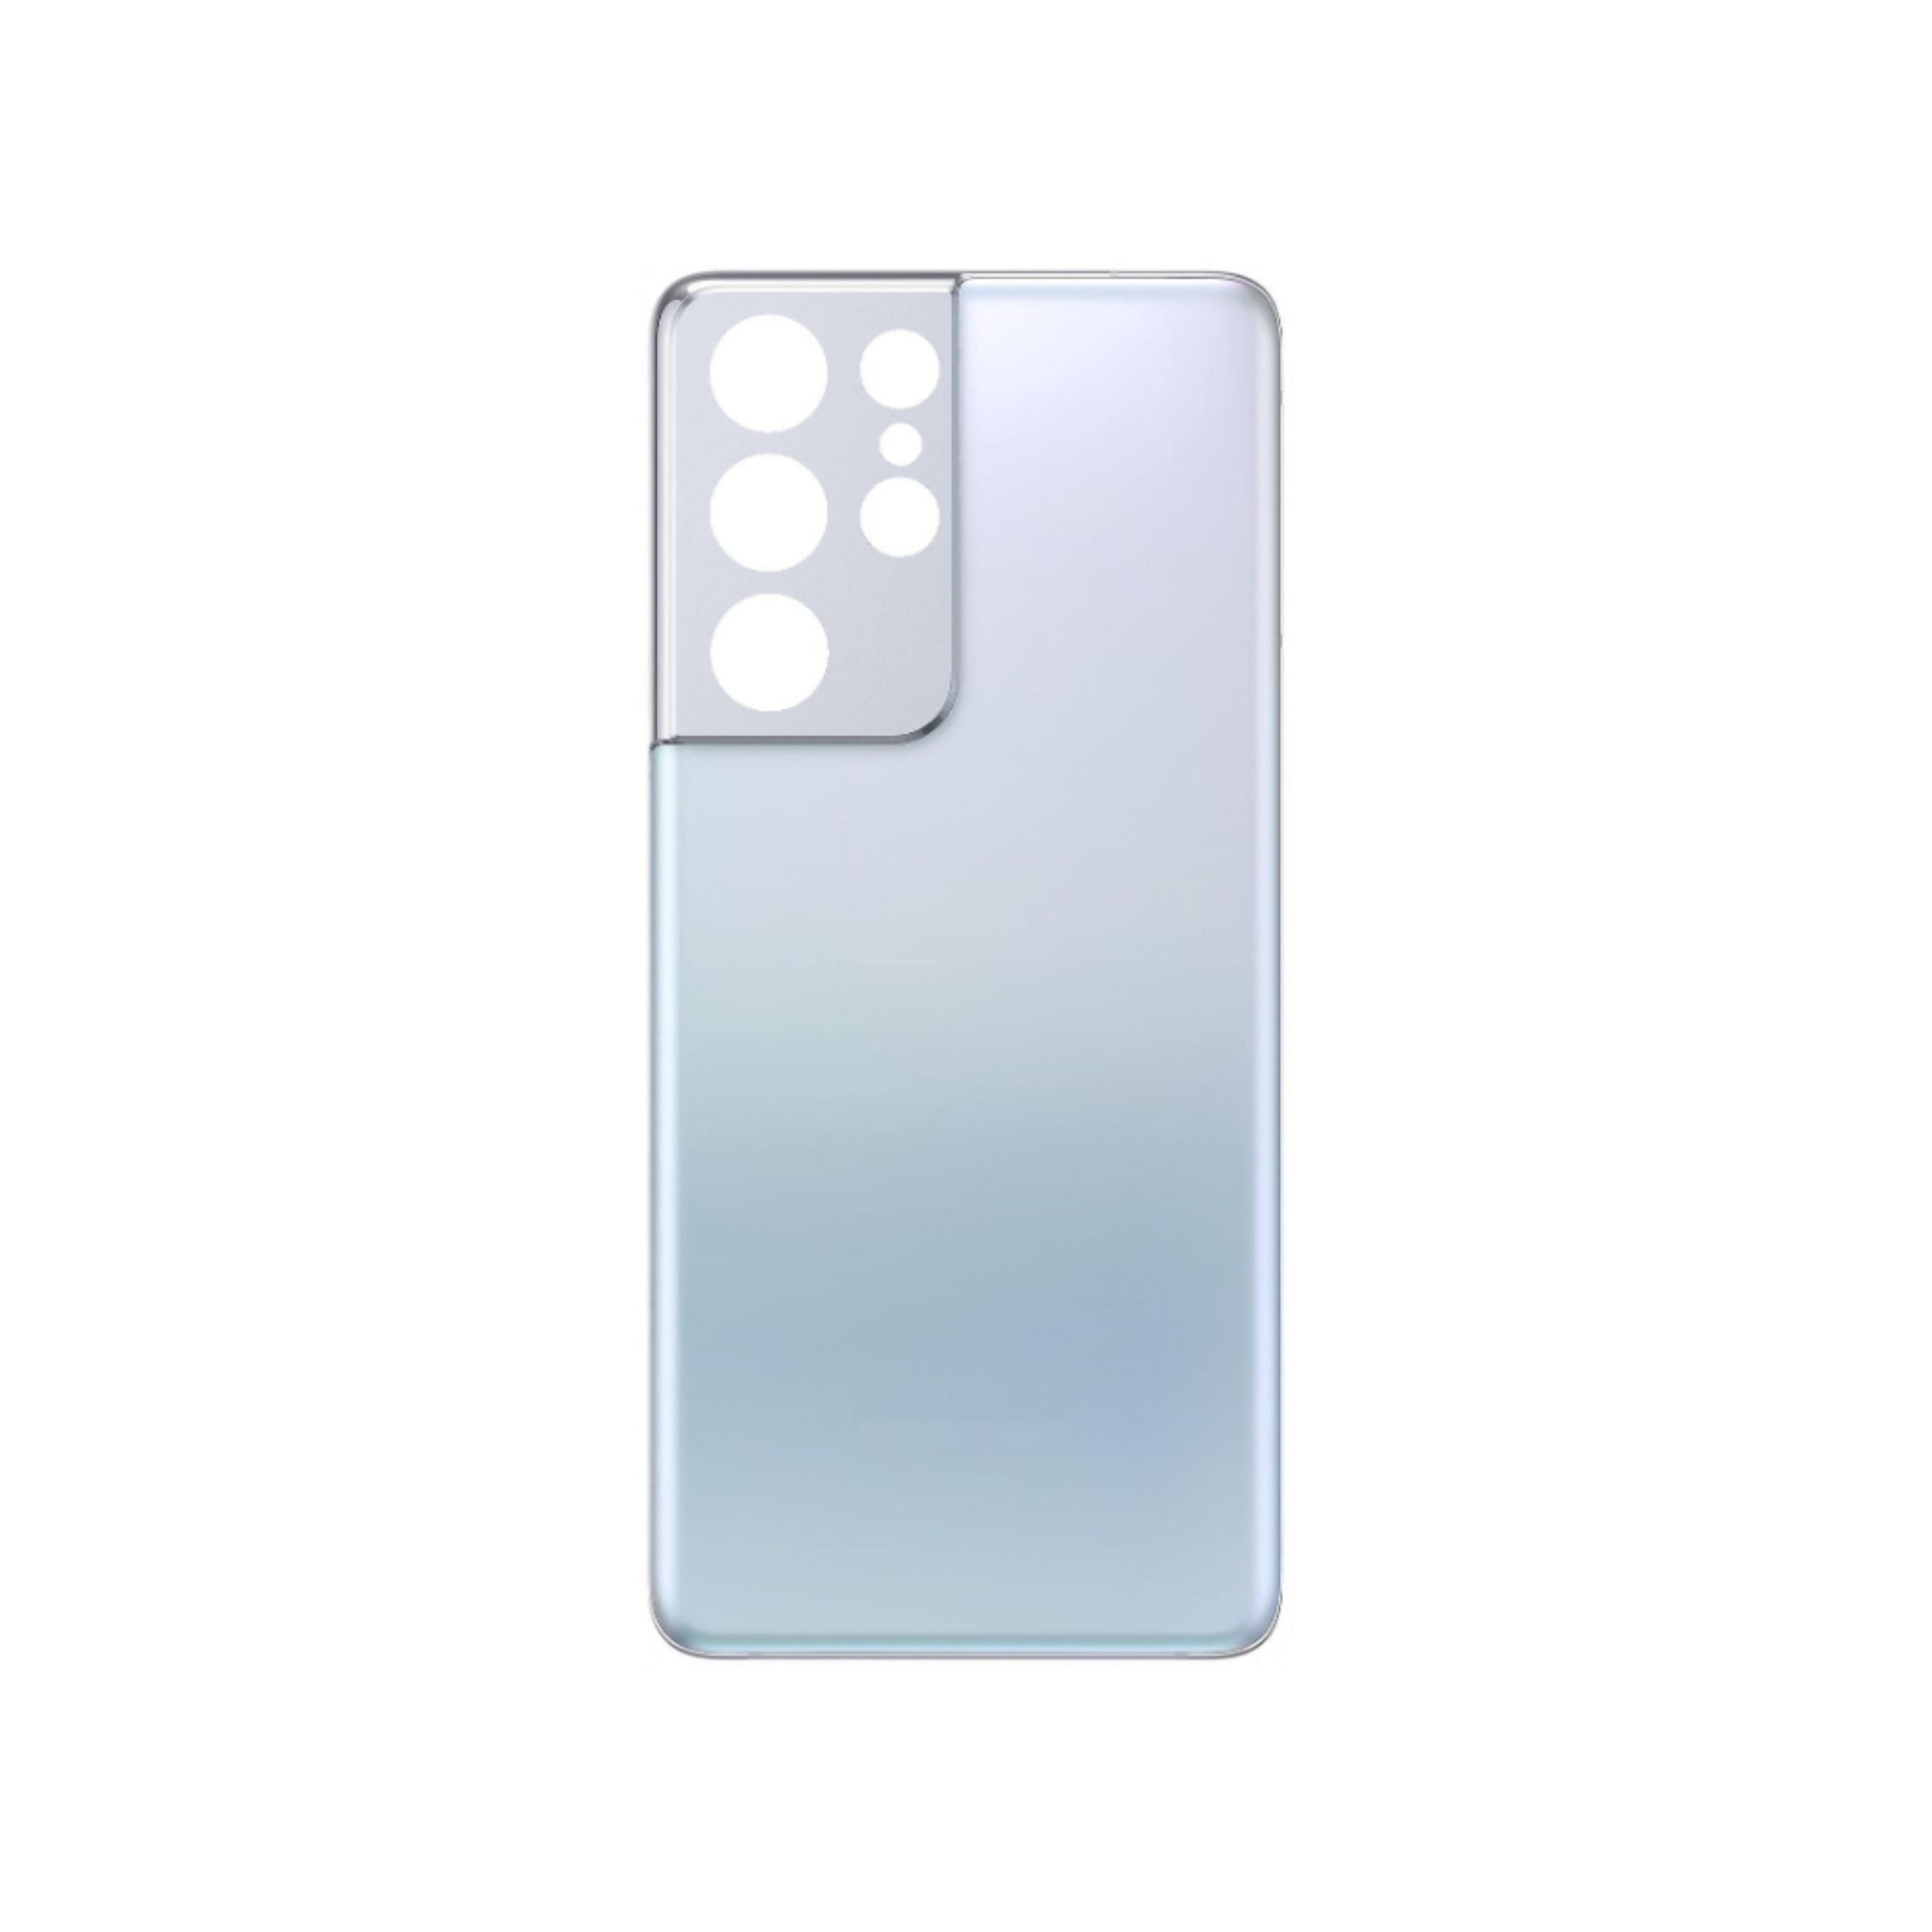 Back Door with Camera Lens for Samsung Galaxy S21 Ultra 5G Phantom Silver